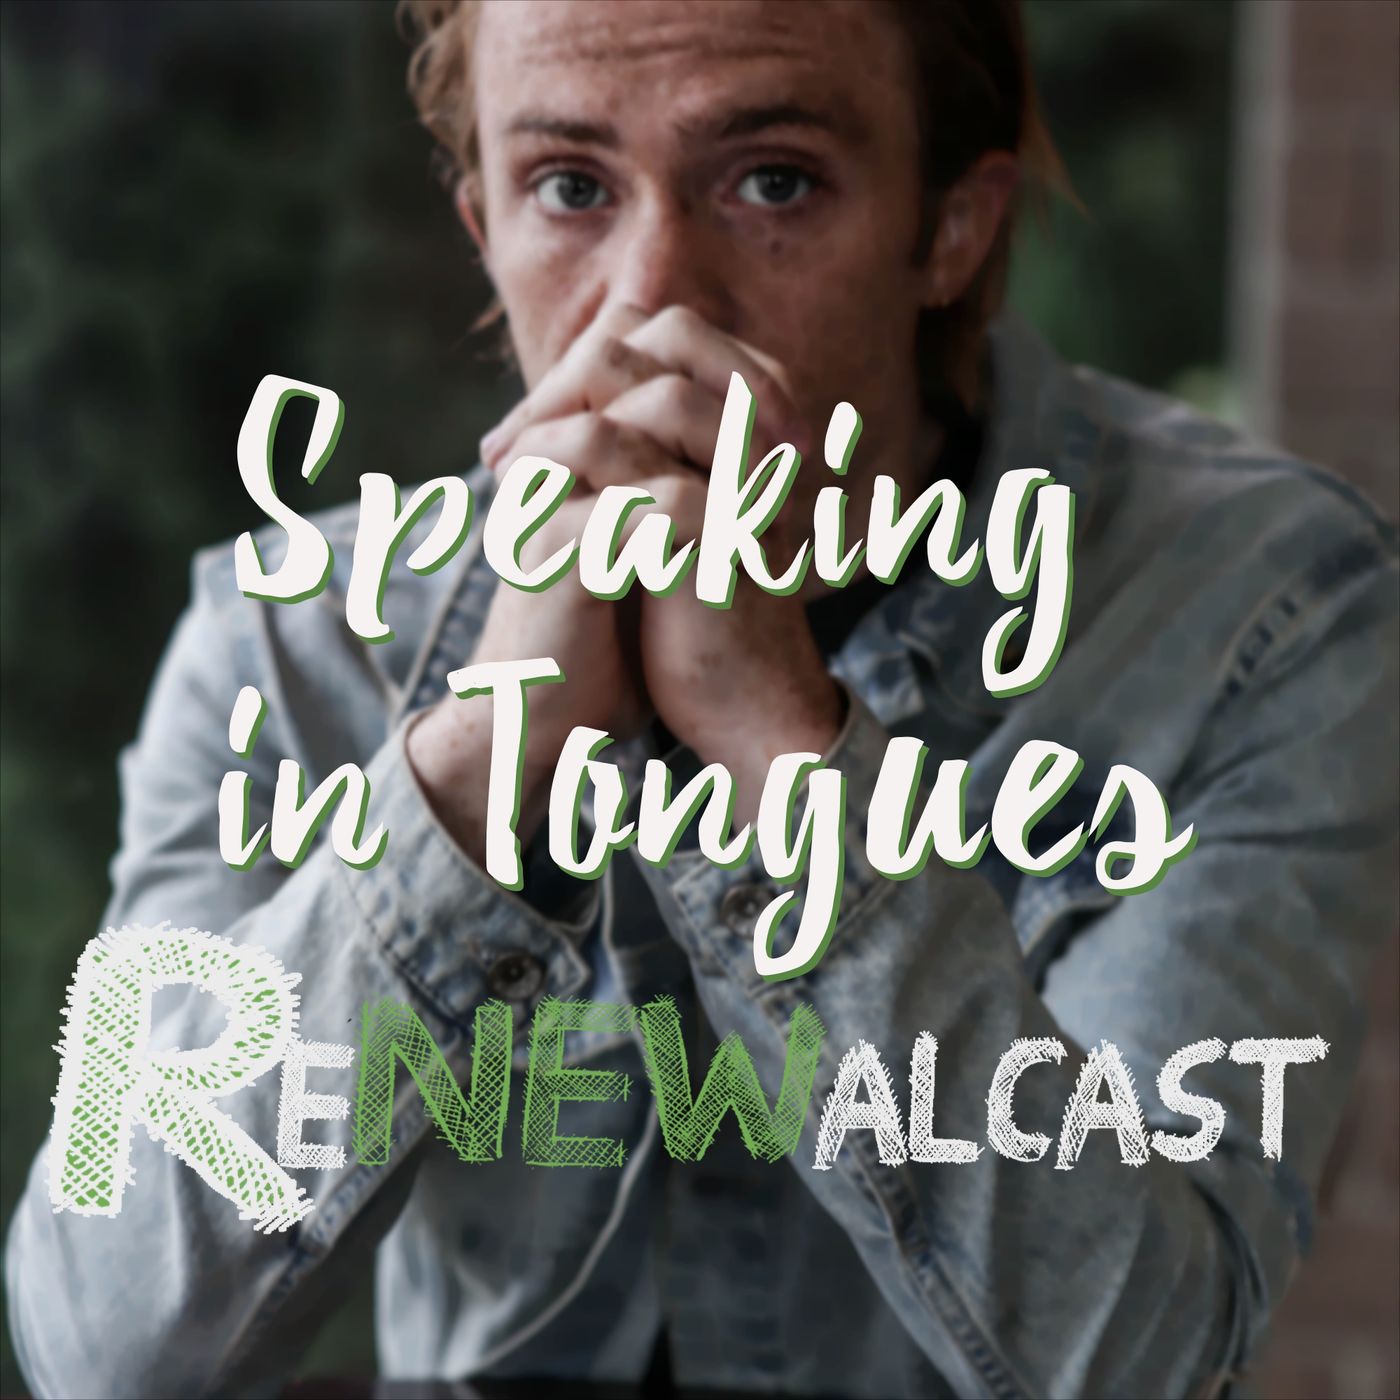 Speaking in Tongues?